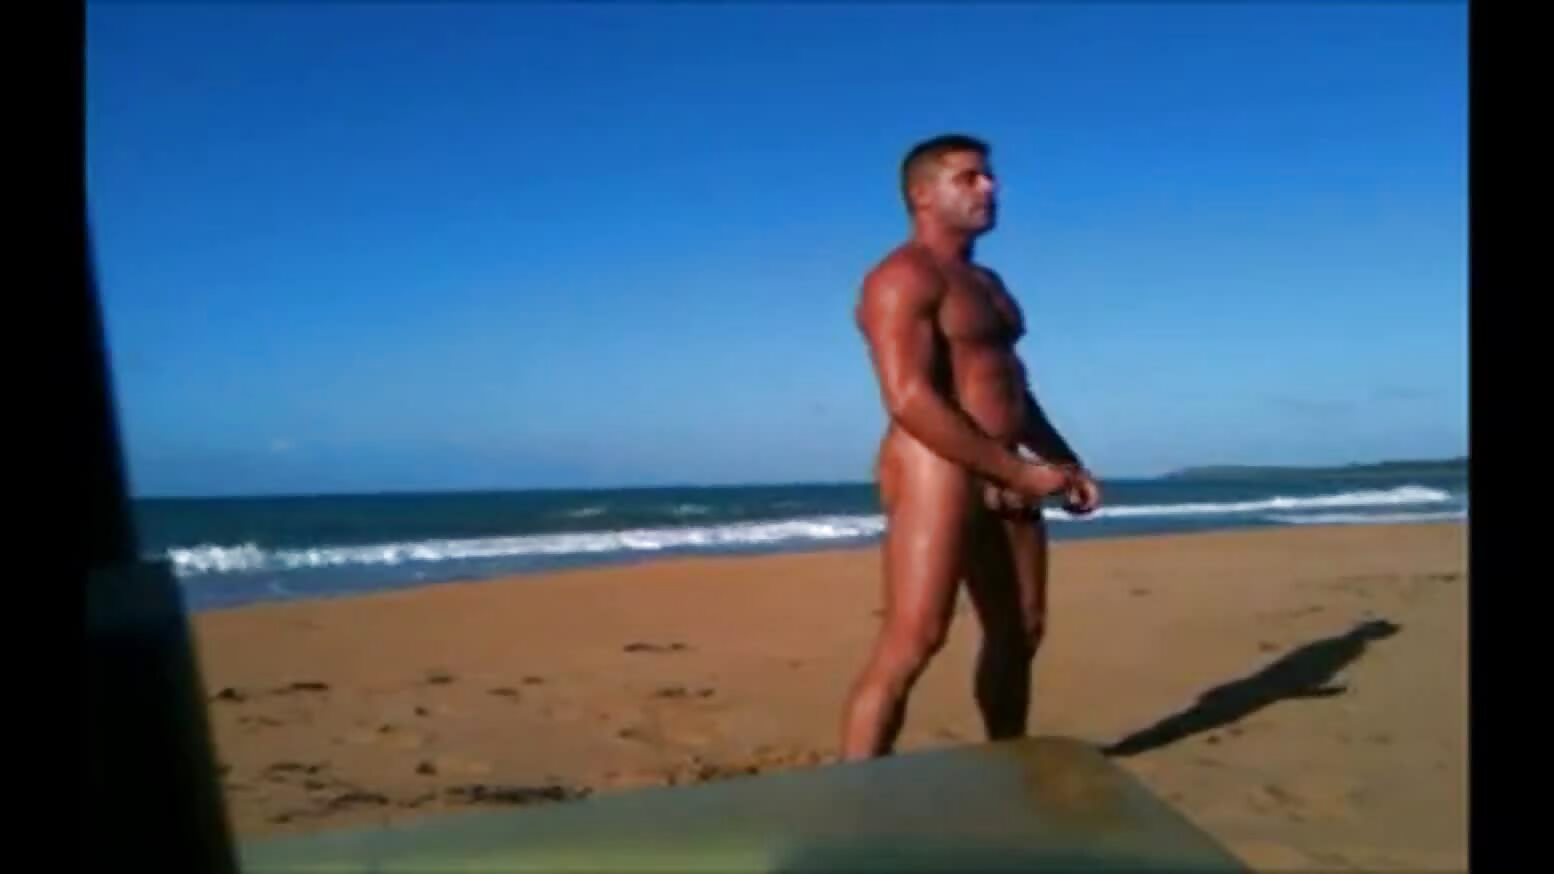 Dois machoes sarados trepando na praia nudista